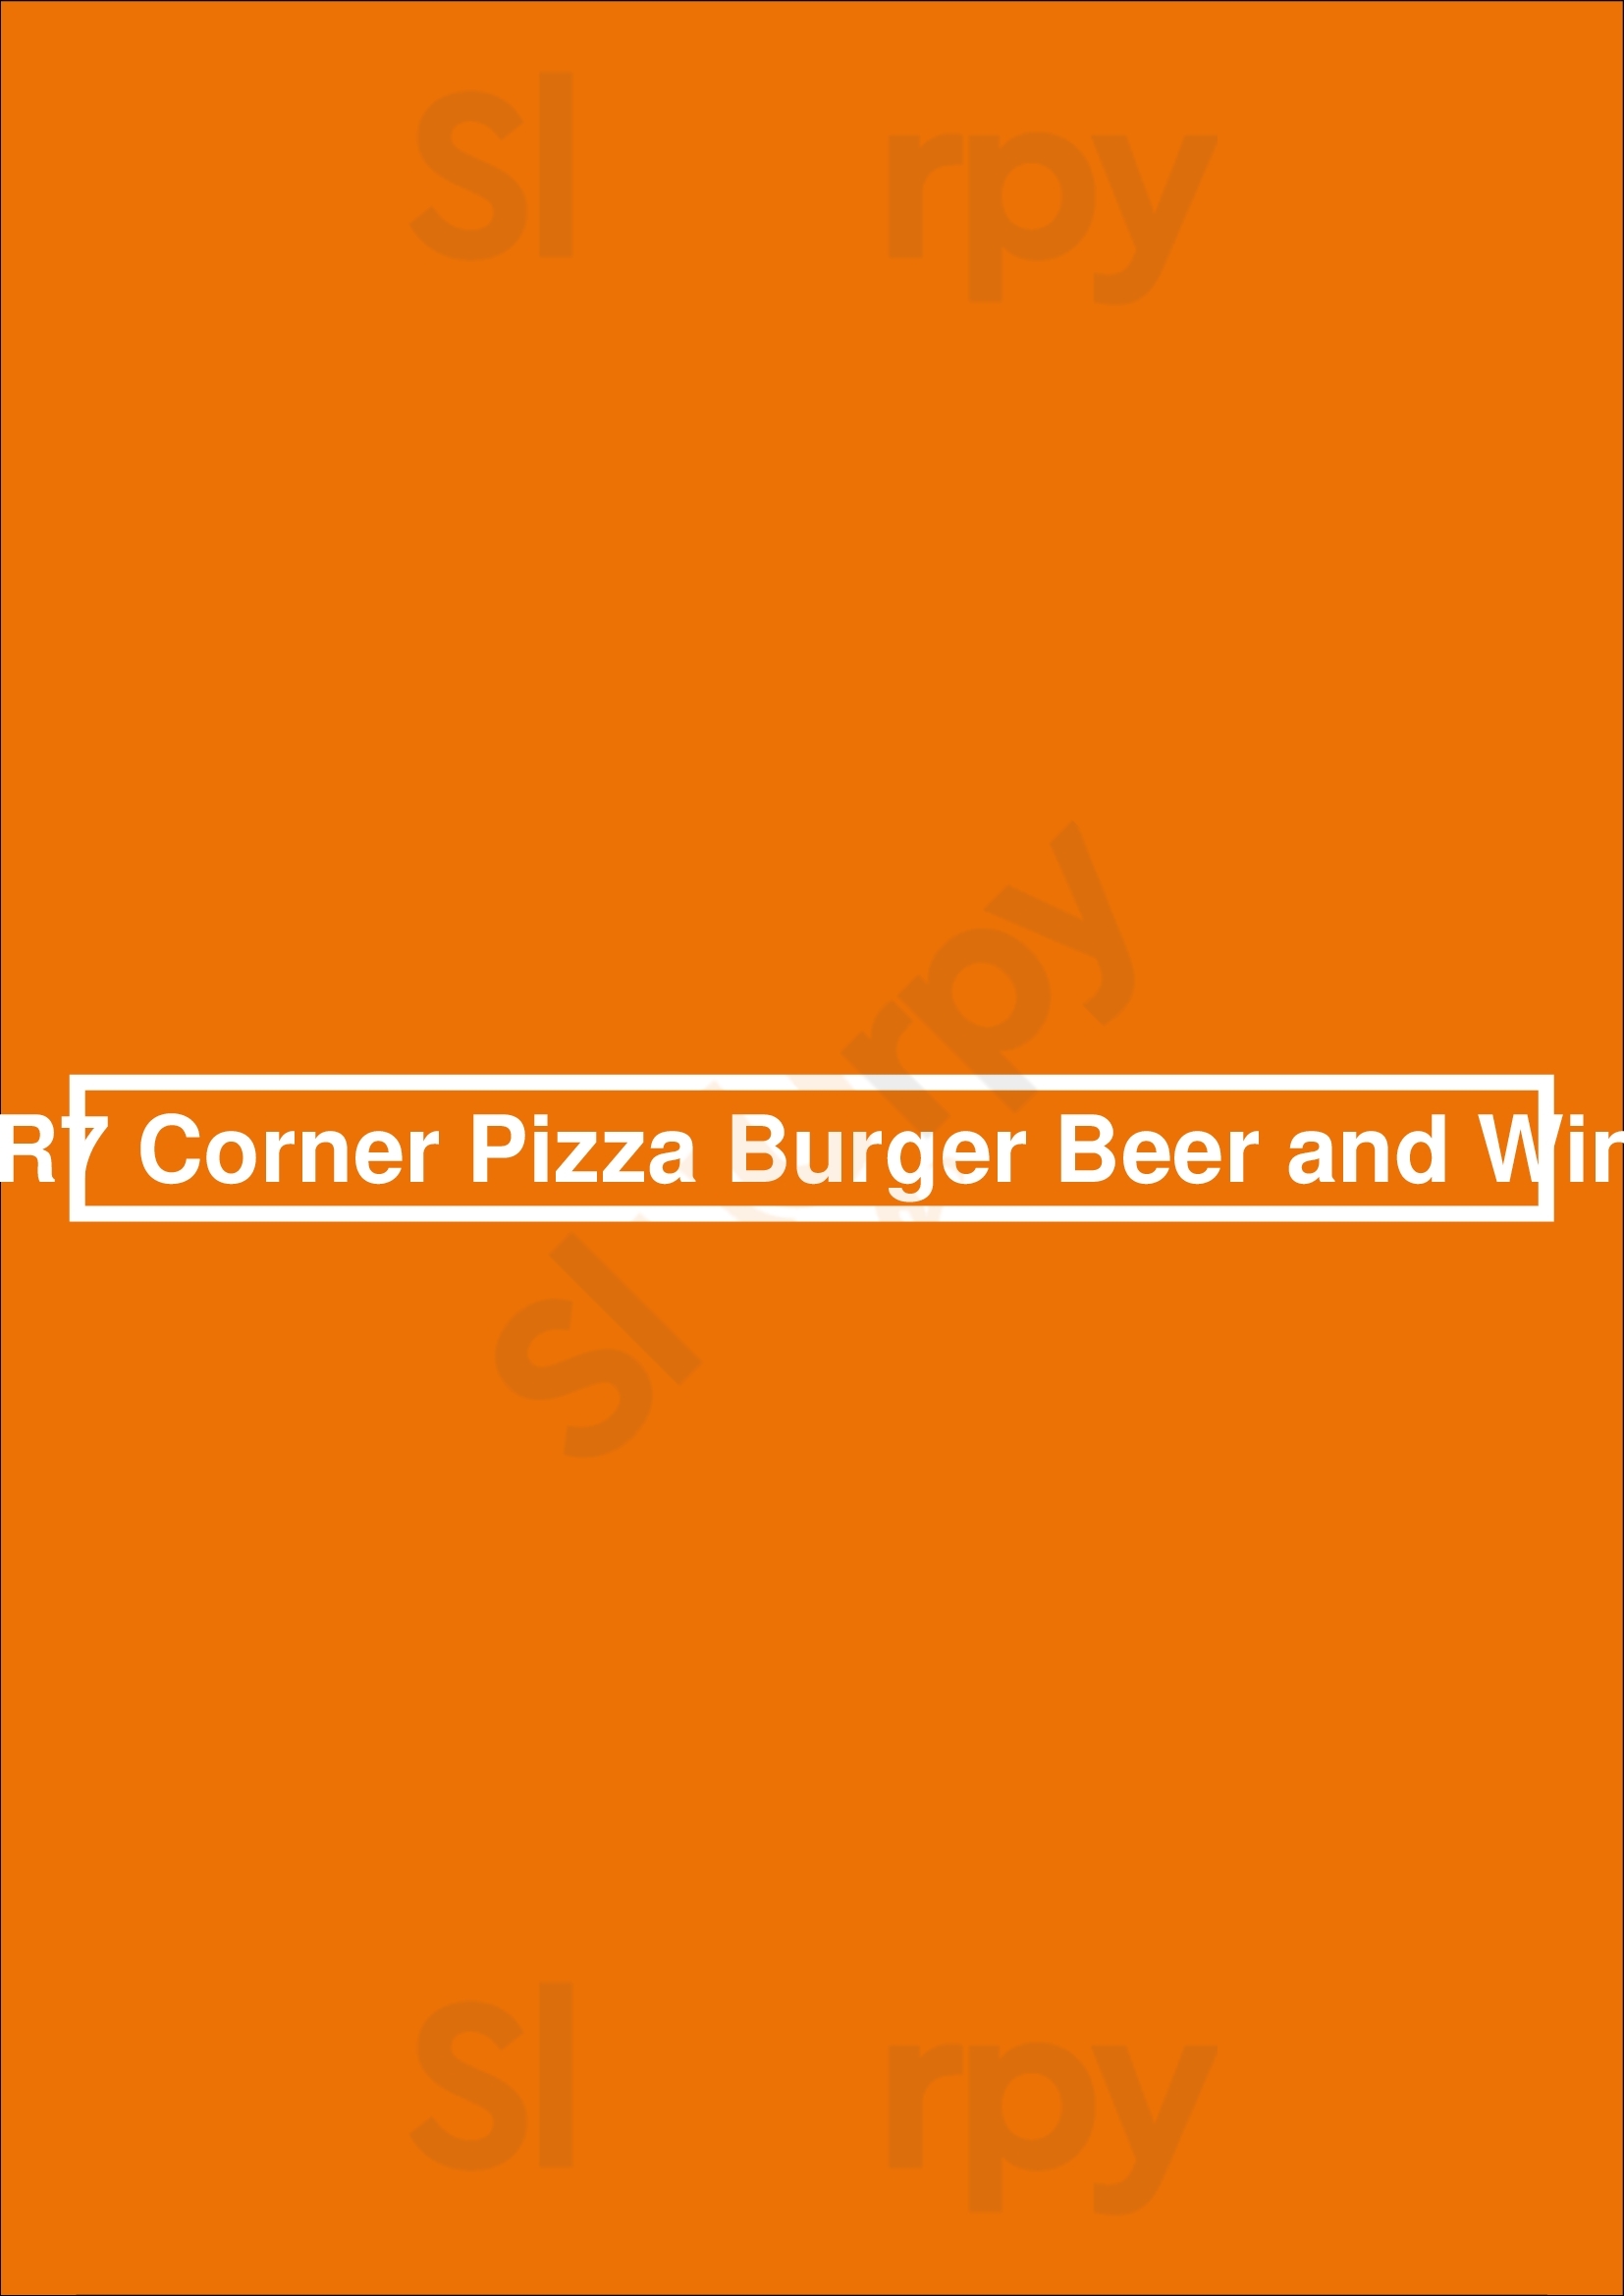 Cr7 Corner Pizza Burger Beer And Wine Funchal Menu - 1